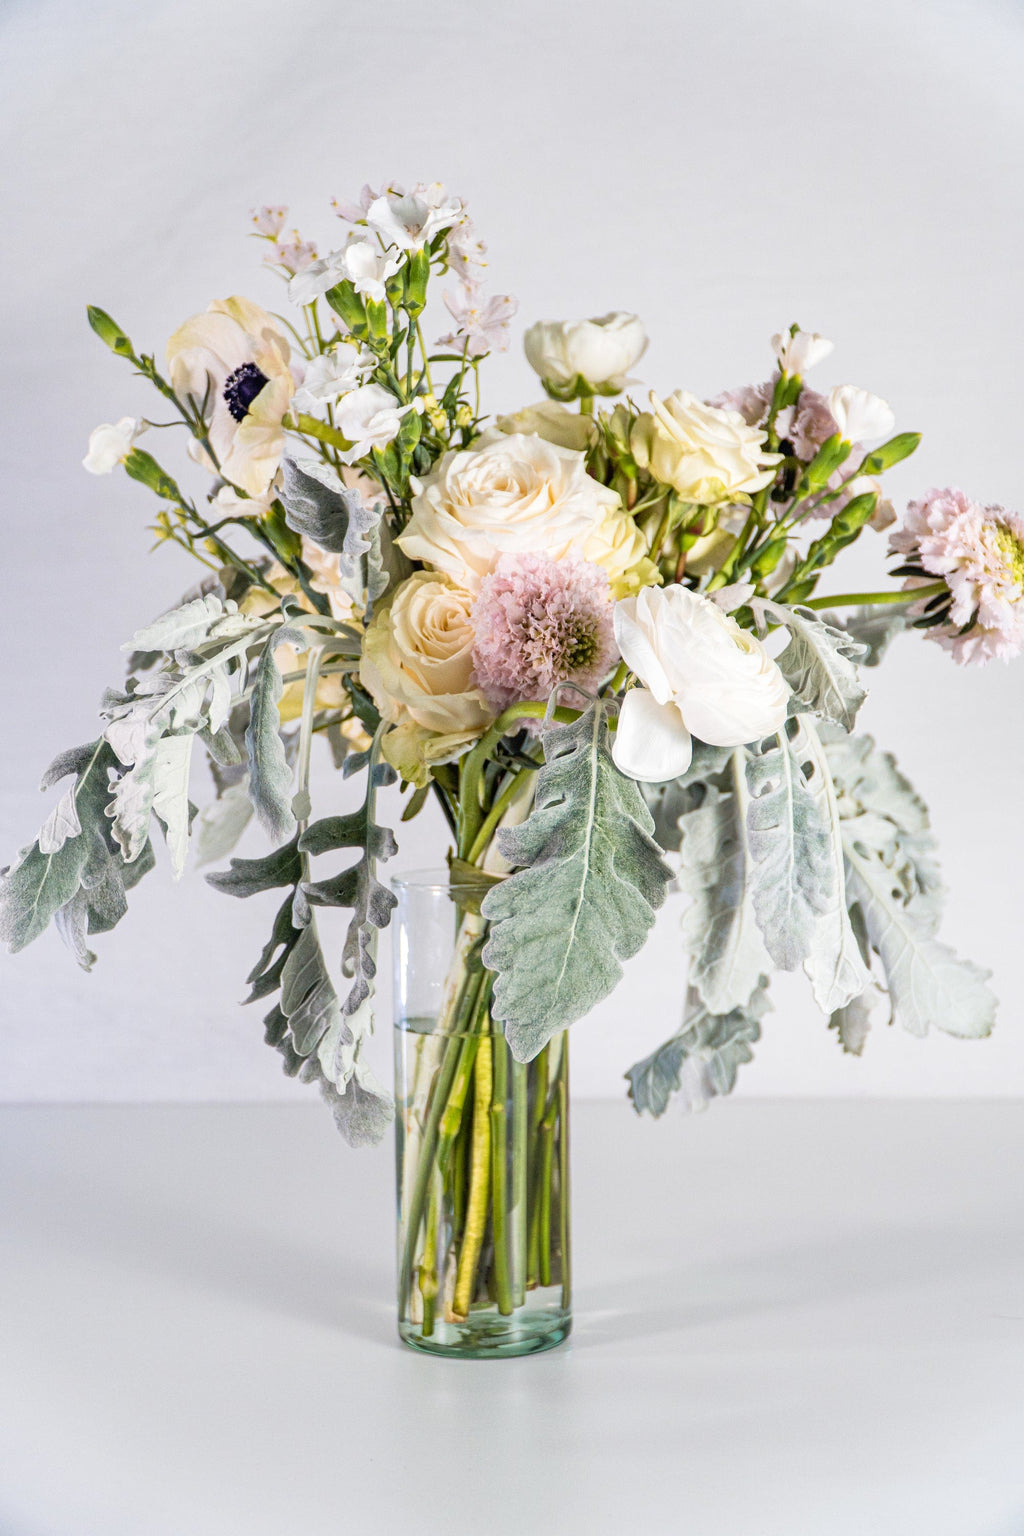 Whipped Cream Wedding - Bridesmaid Bouquet